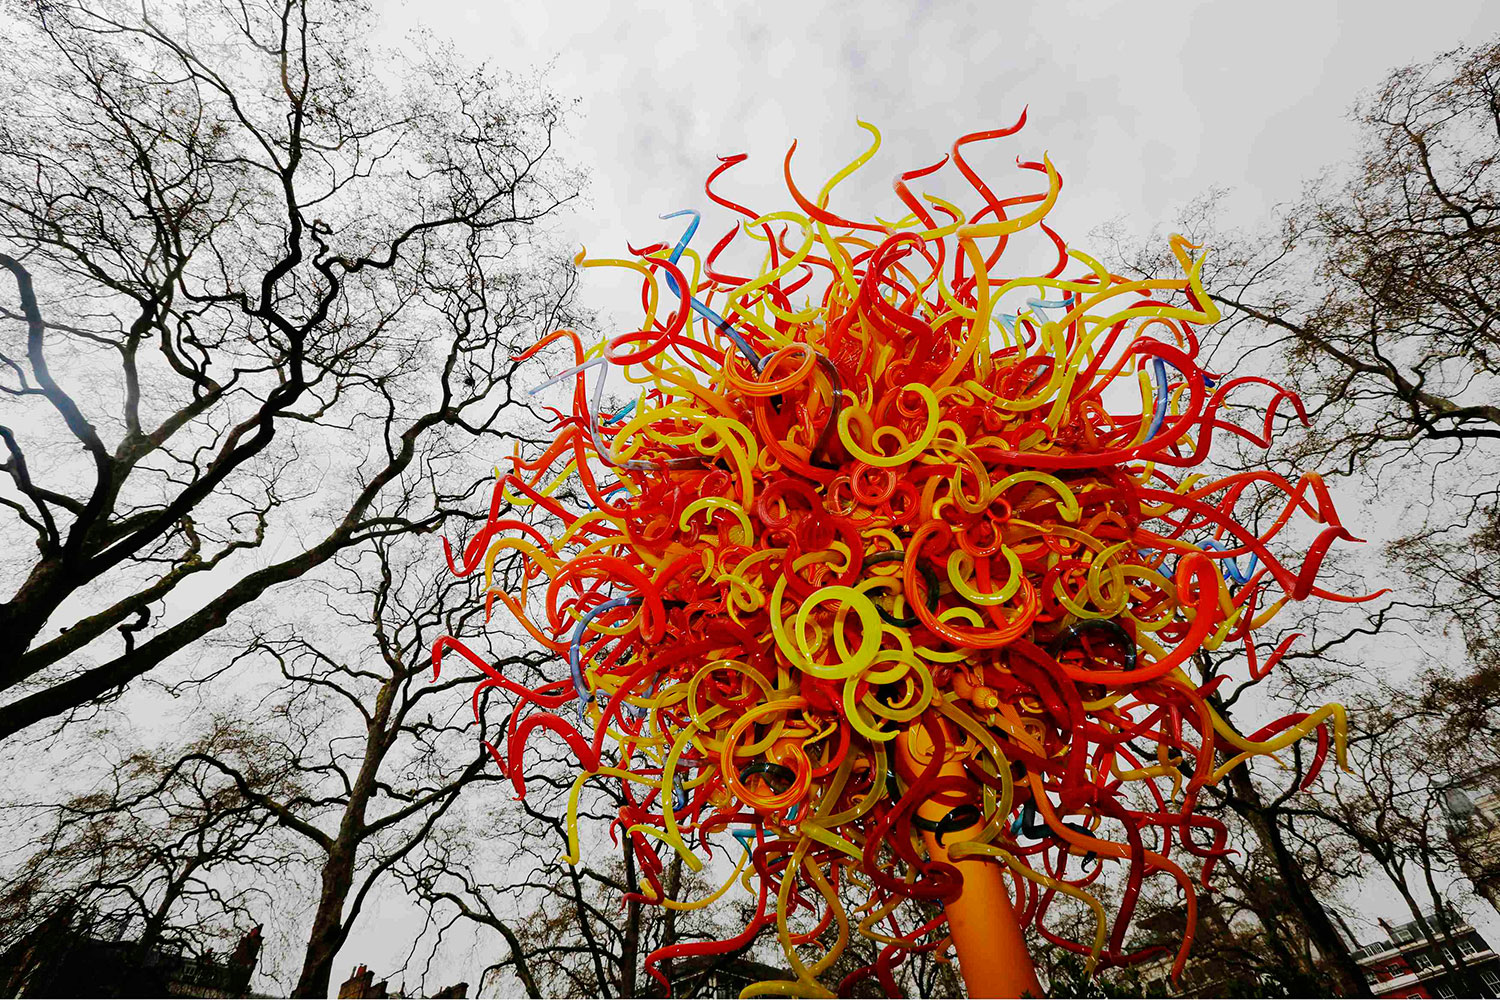 La escultura del artista Dale Chihuly, The Sun, se exhibe en la plaza Berkeley de Londres